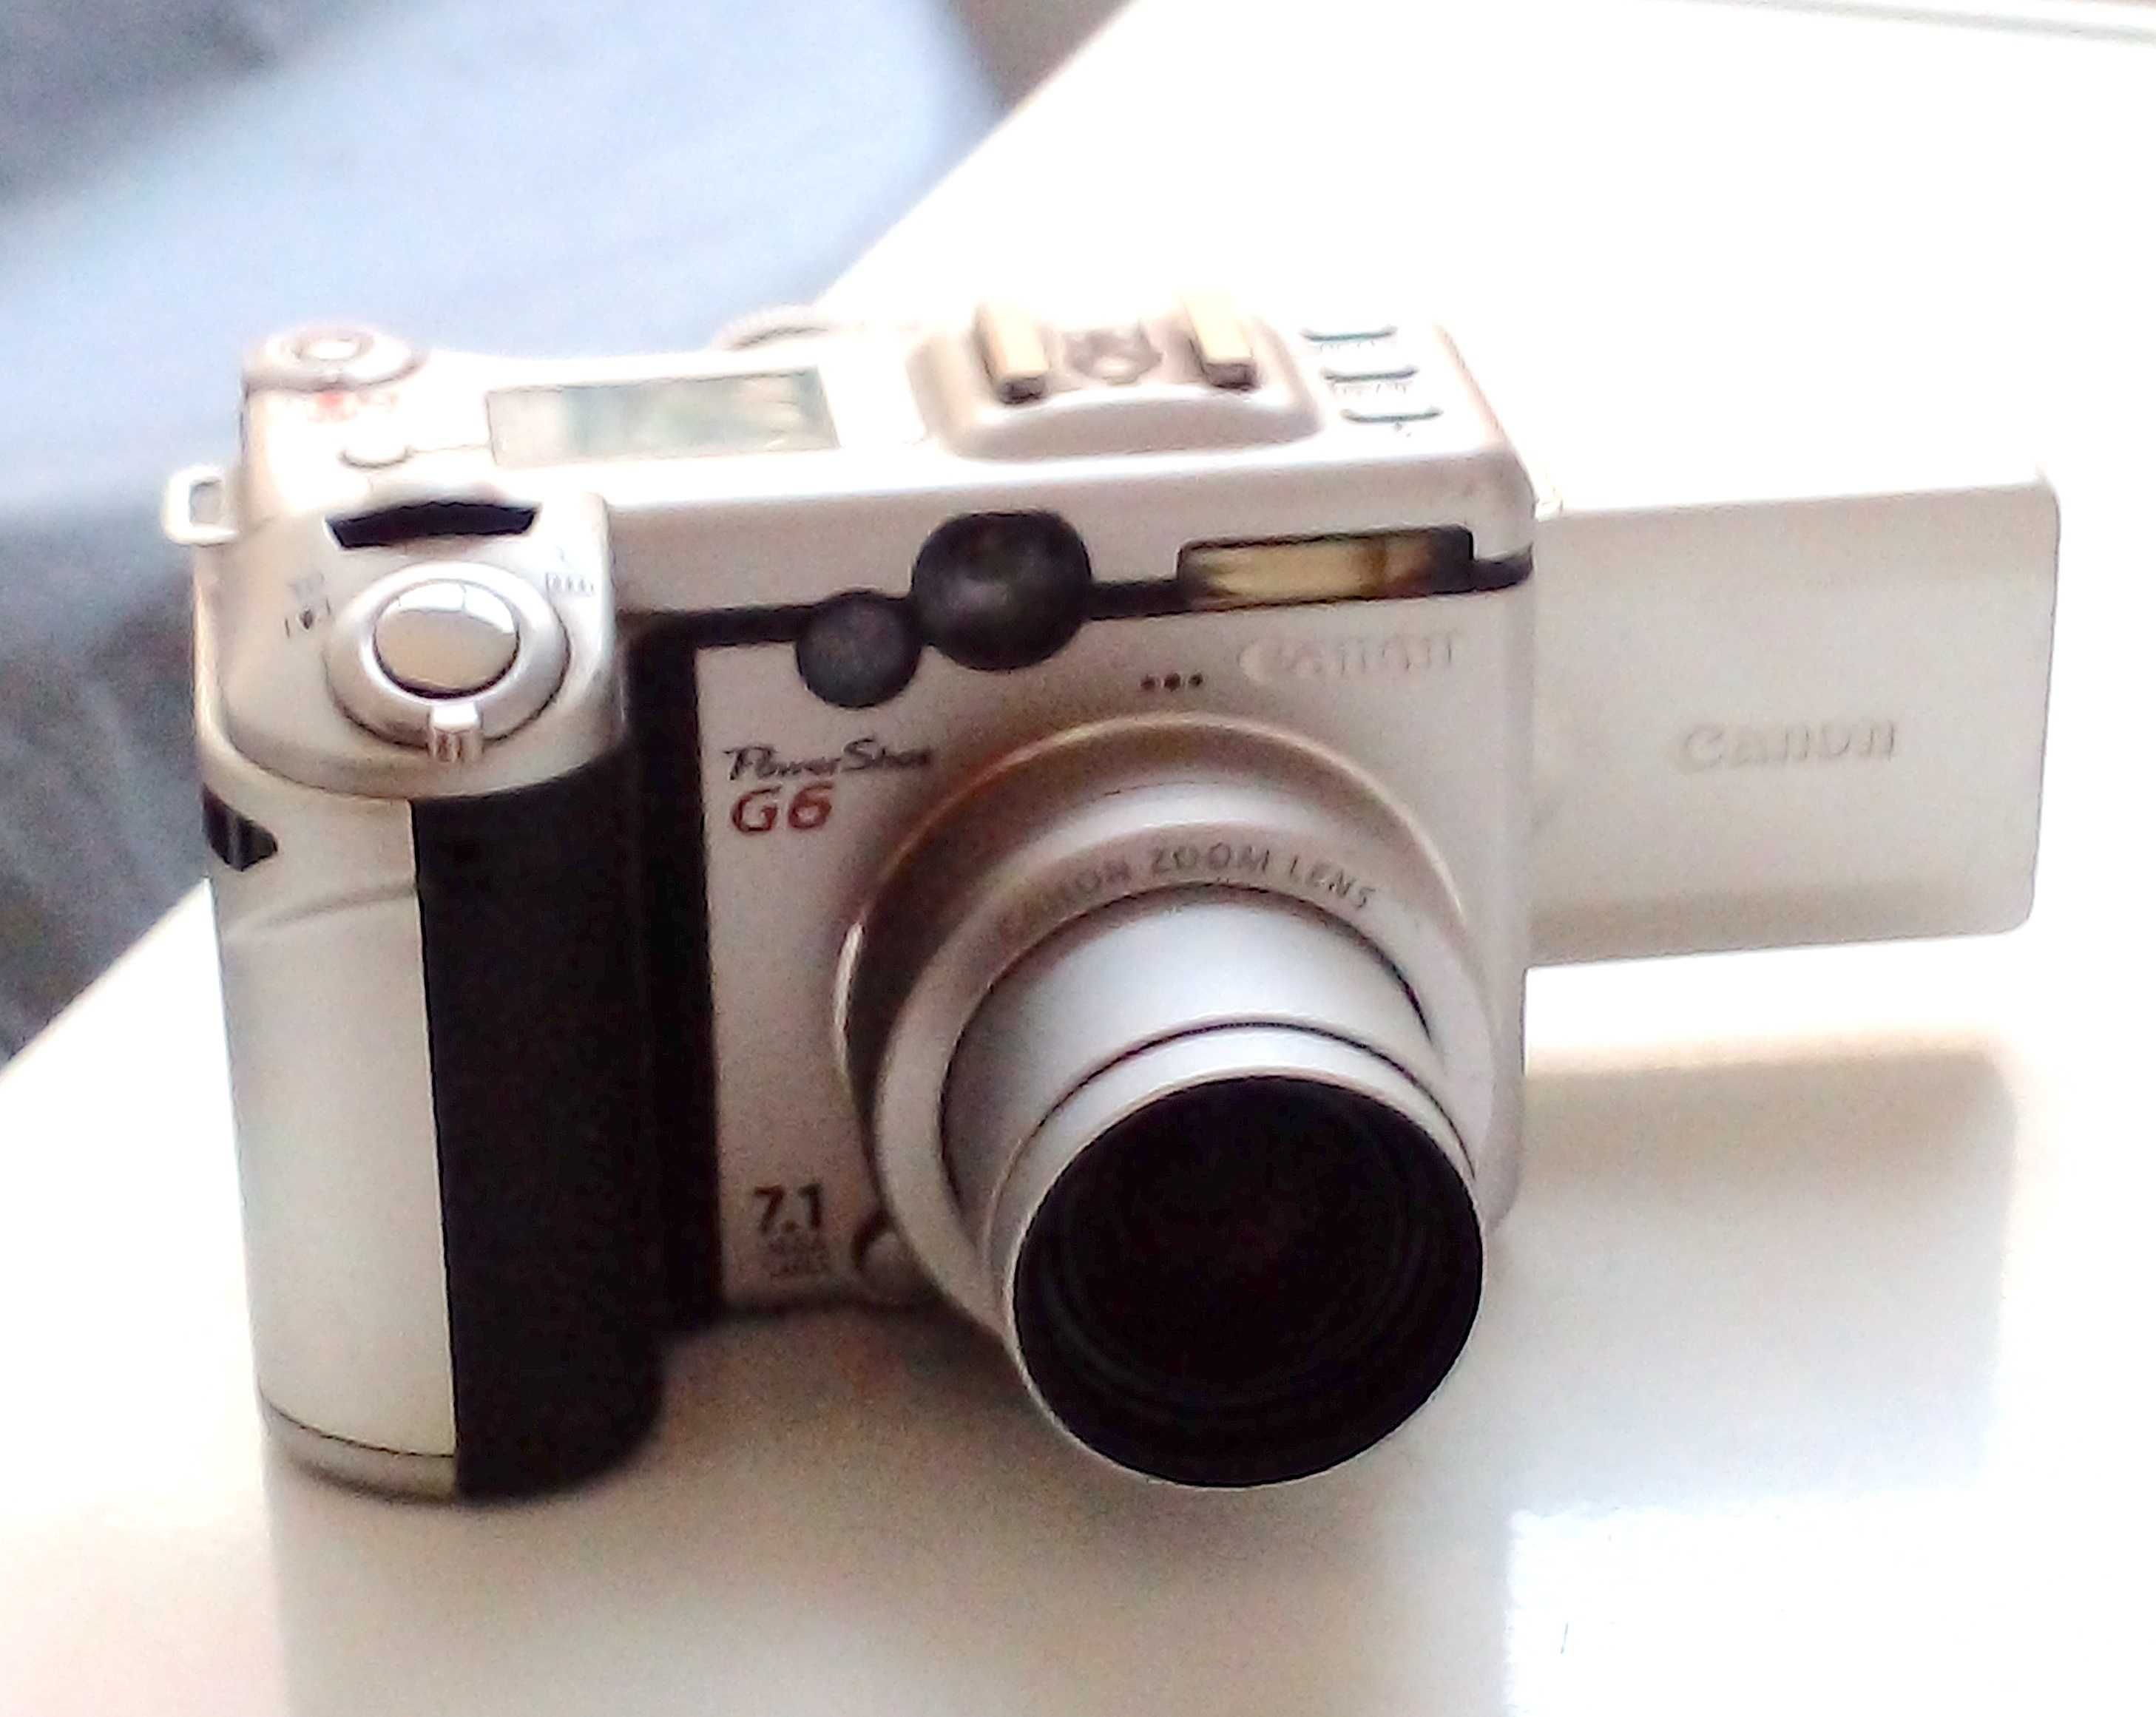 Canon Powershot G6 Digital Camera (Made in Japan)